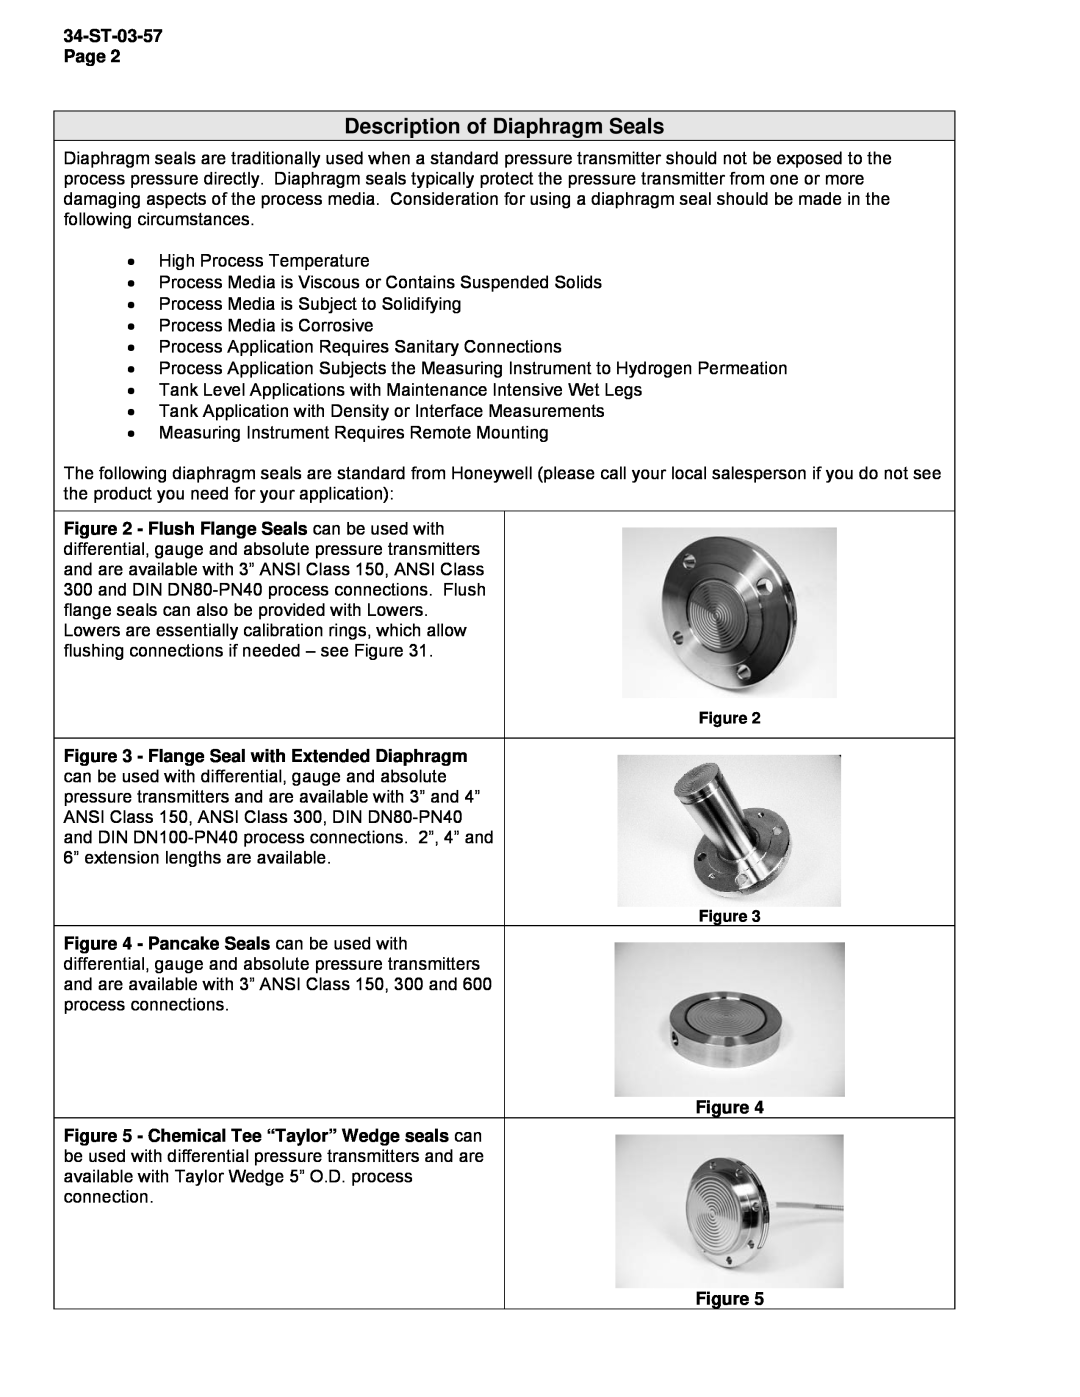 Honeywell STR93D, STR94G manual Description of Diaphragm Seals 